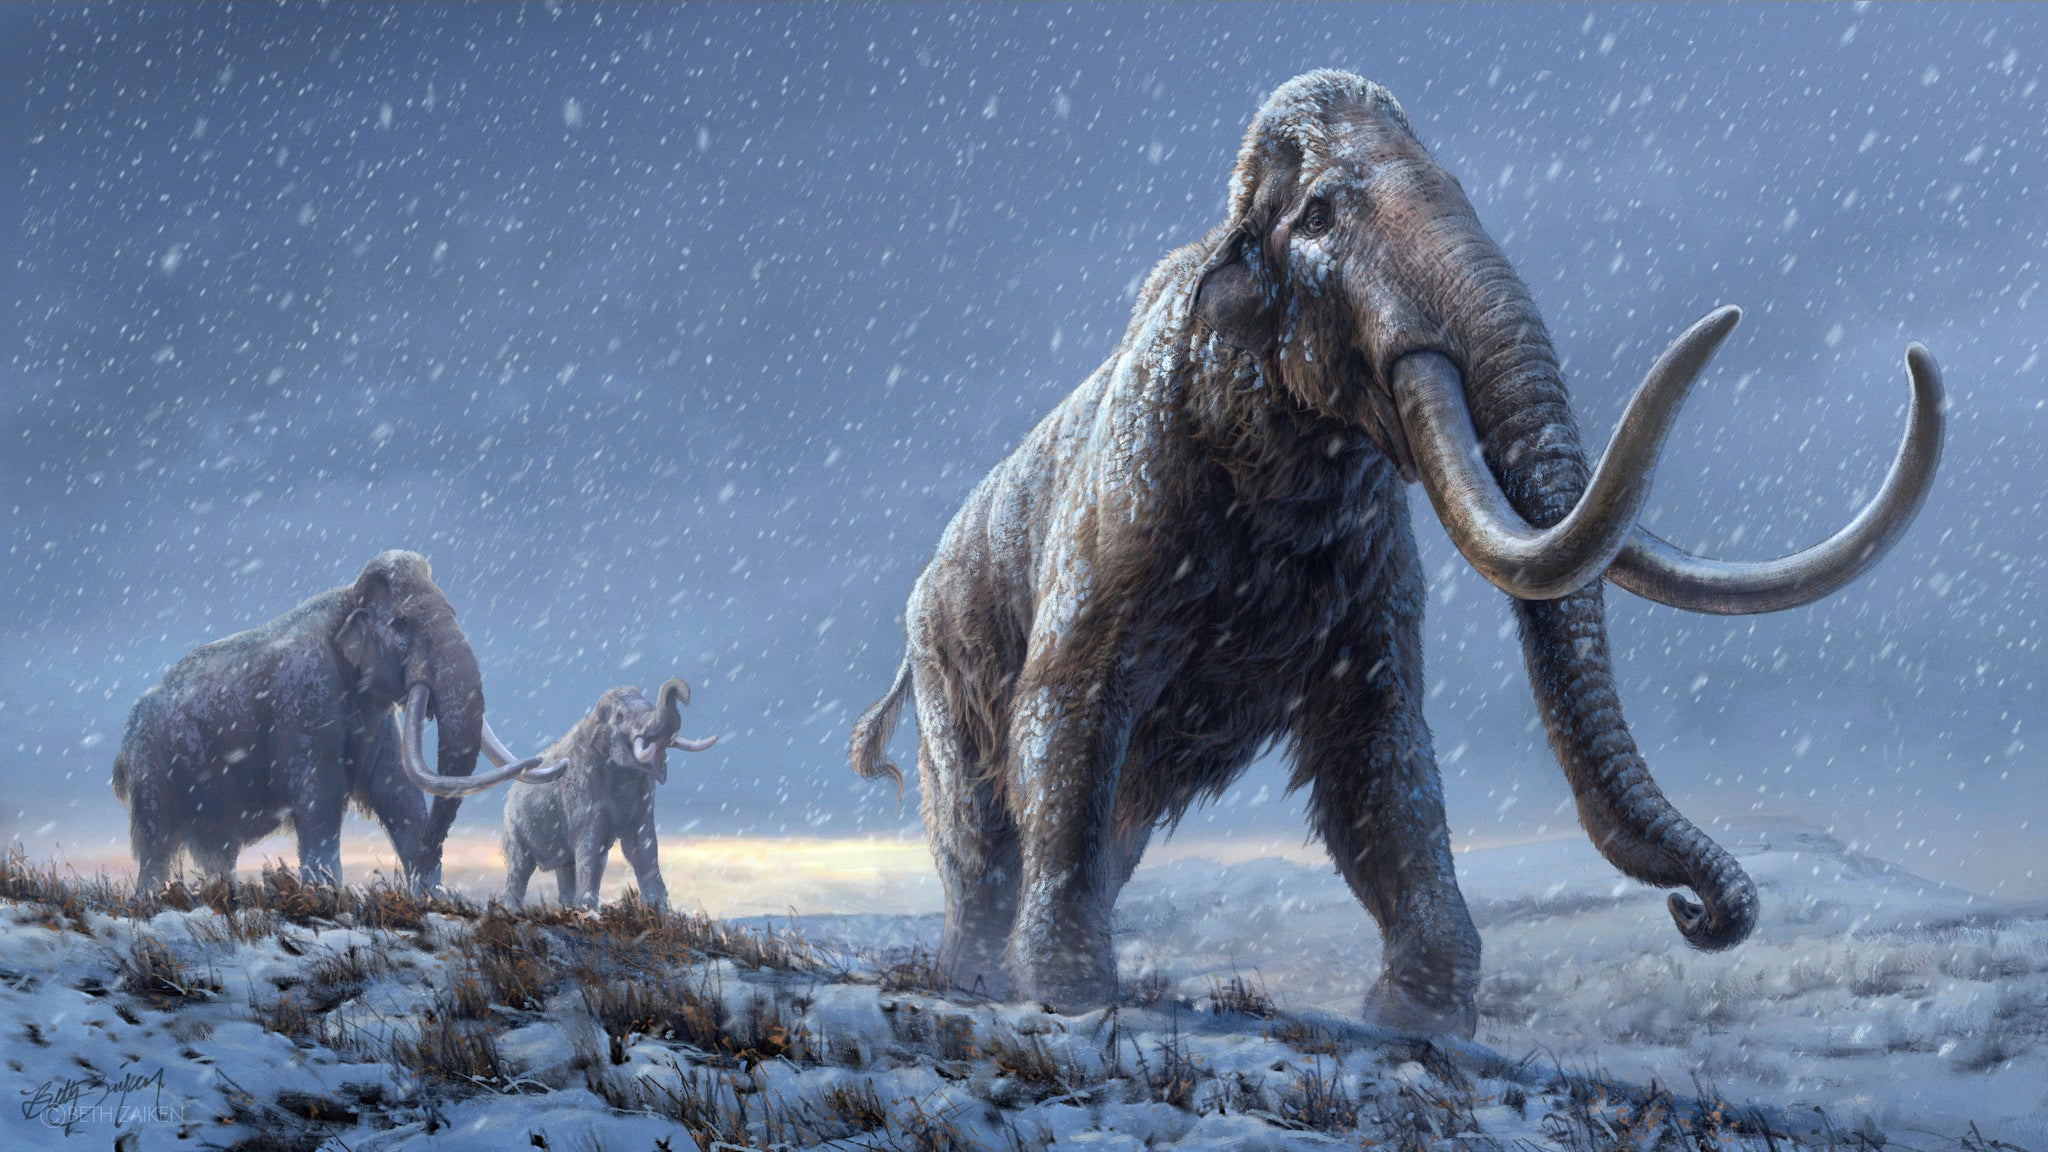 evolution fossil evidence of elephant